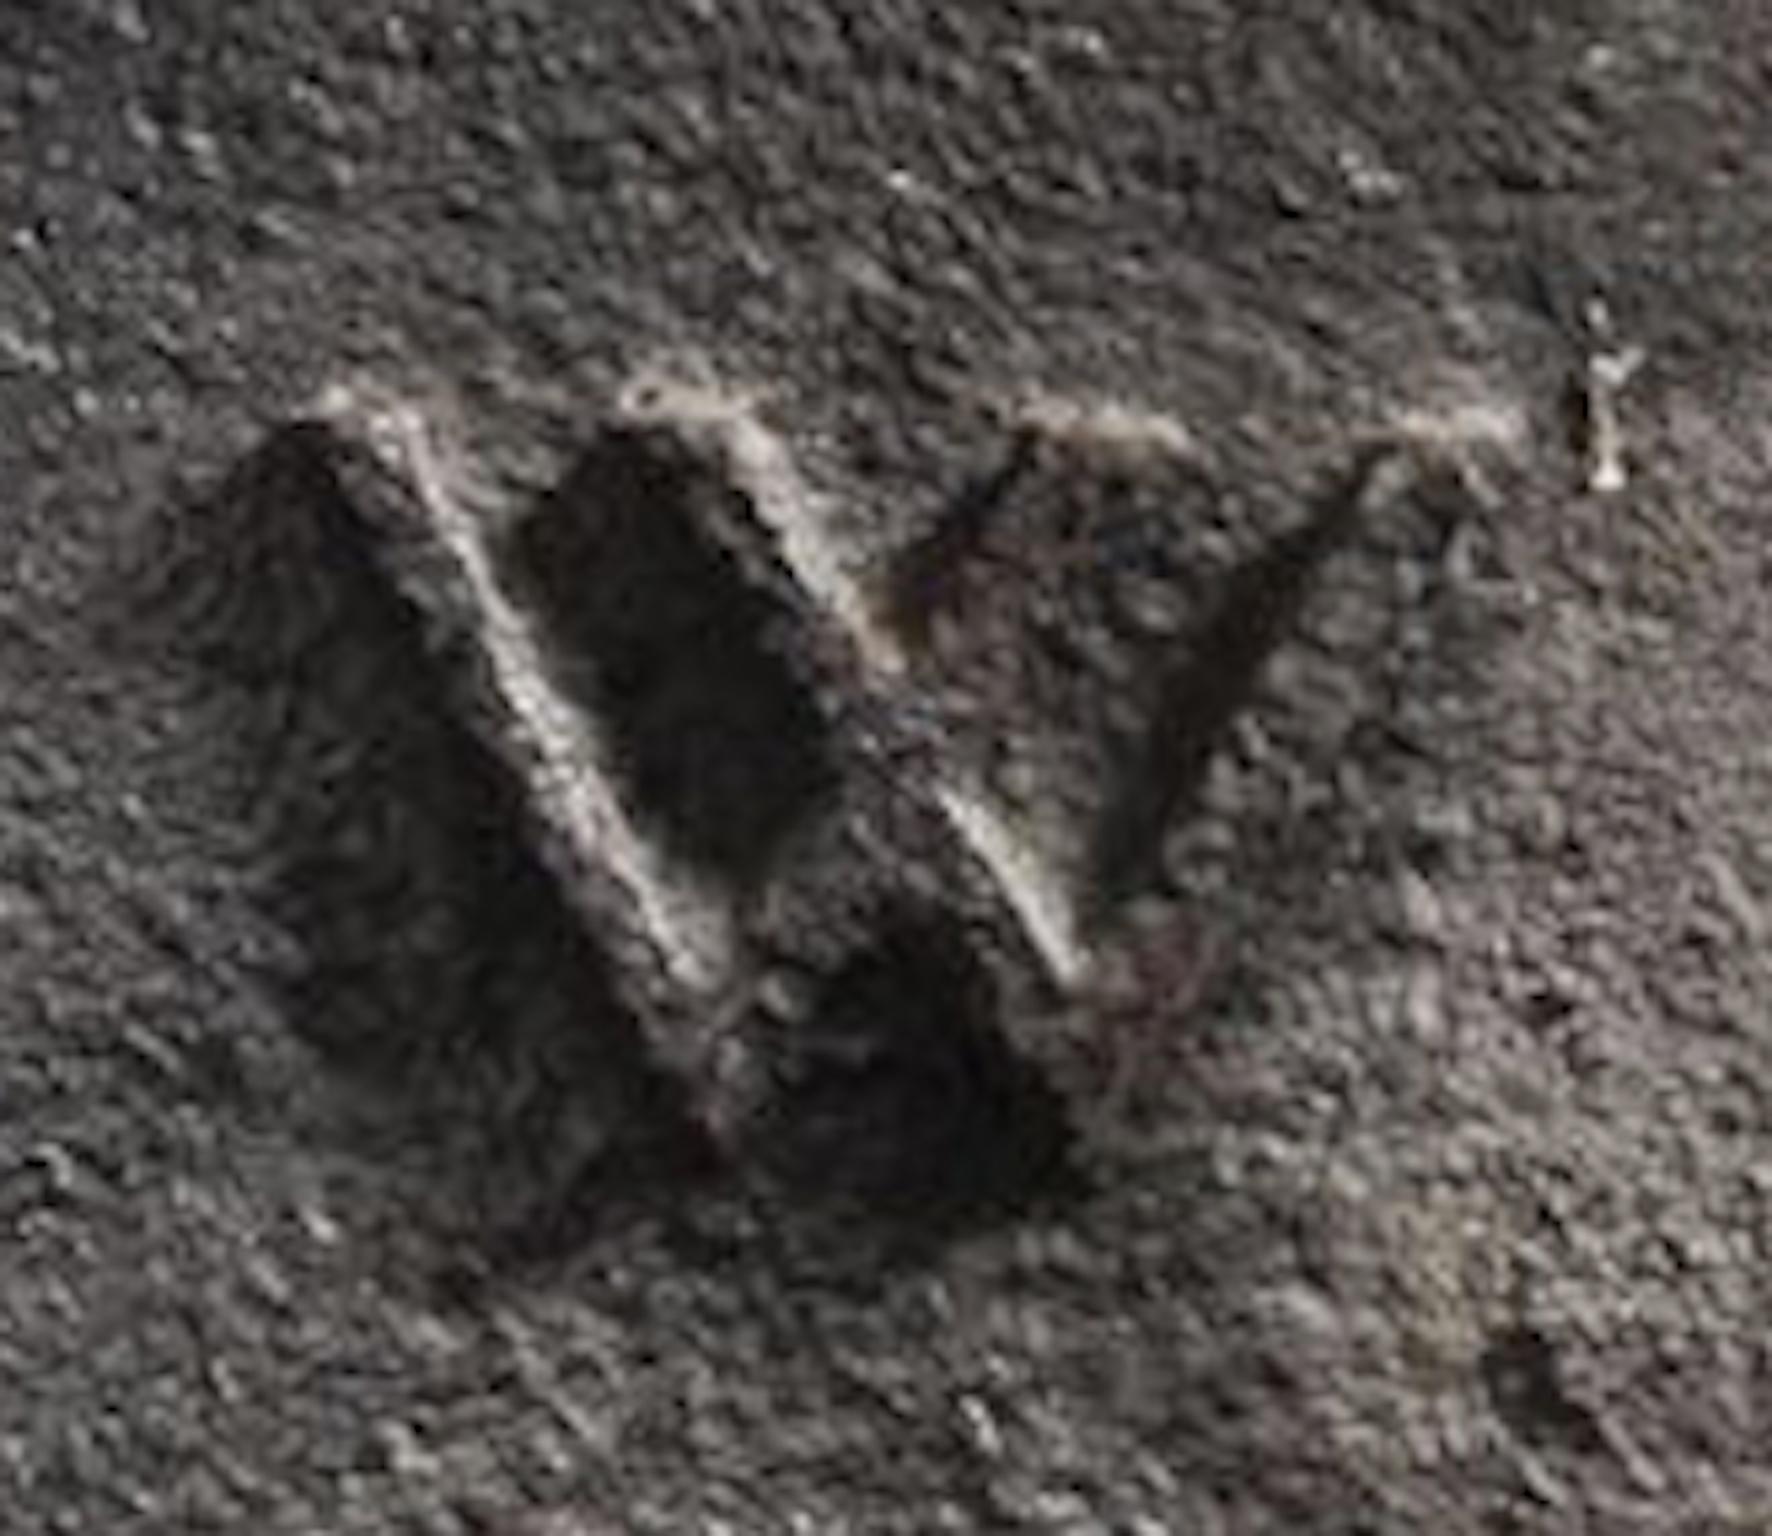 Fireback, cast iron, 17th century, English, bearing the initials W S.